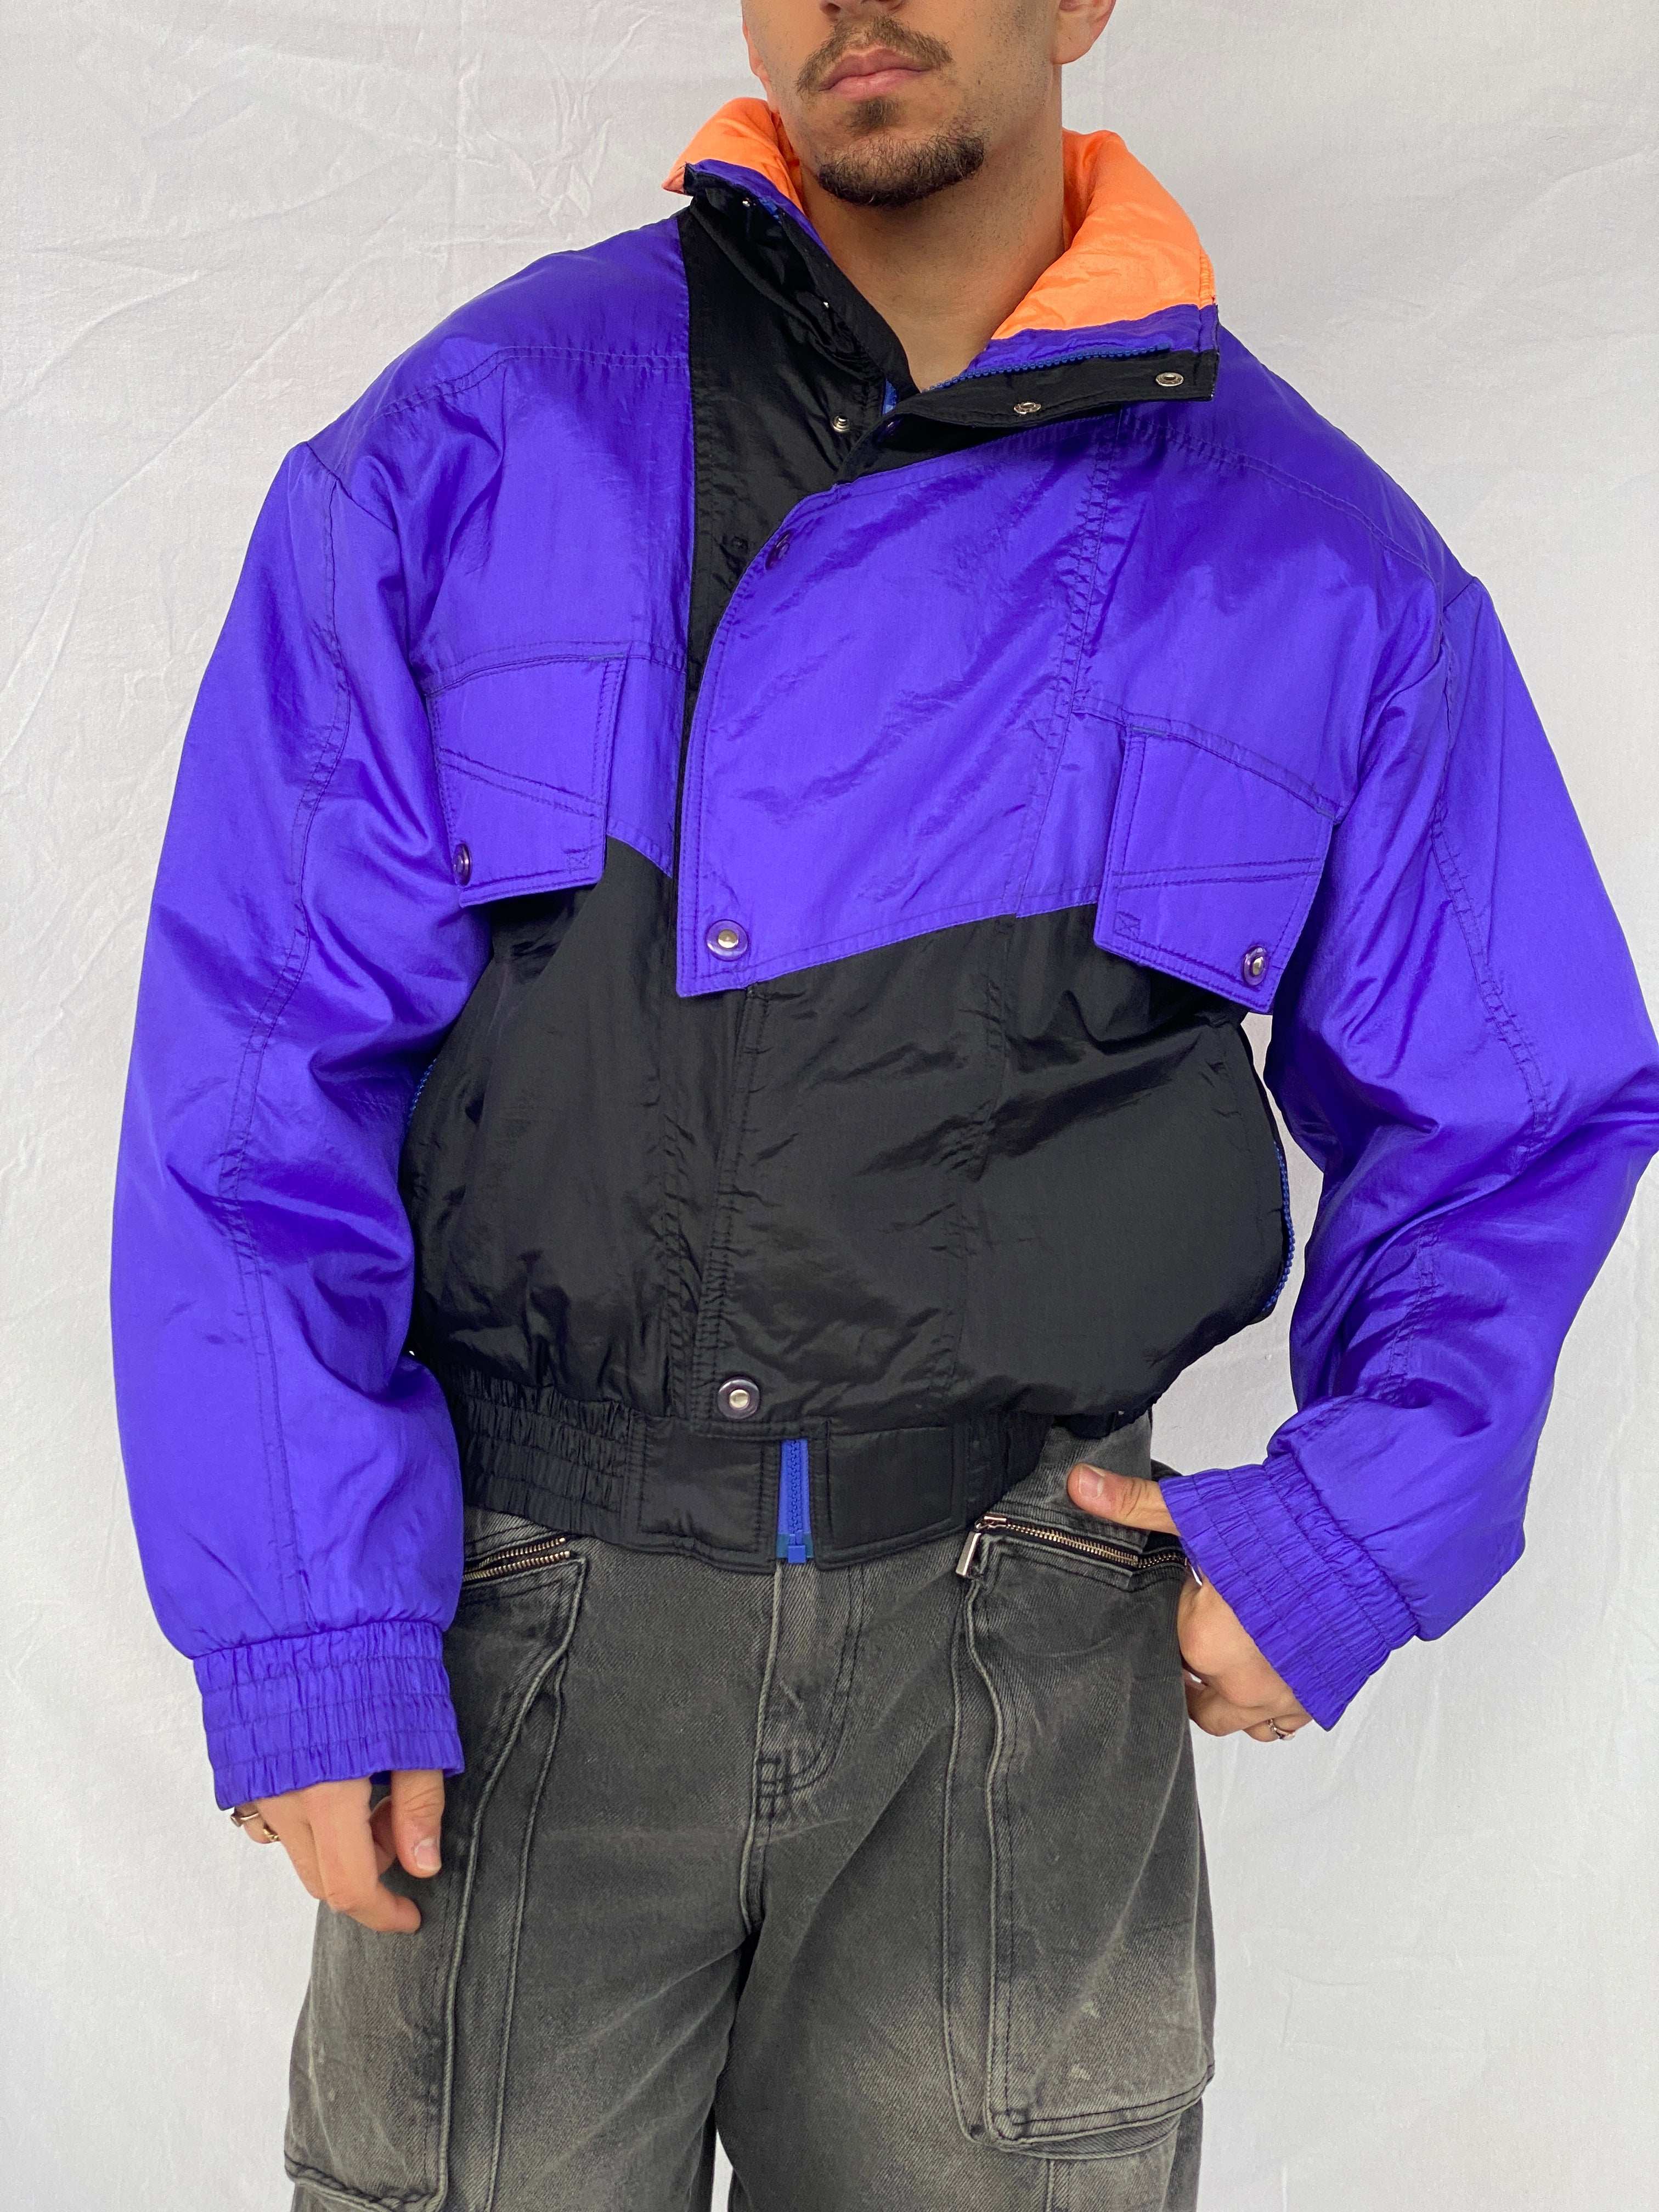 Vintage White Stag Purple Puffer Ski Jacket - Size M